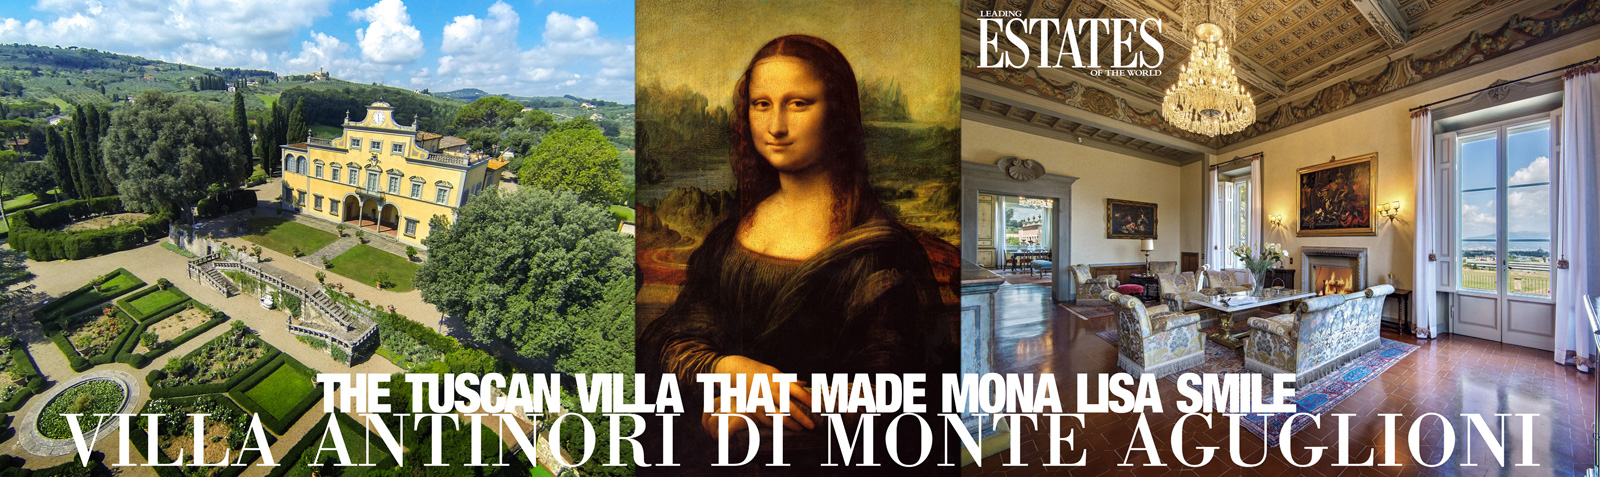 The Mona Lisa, flanked by images of the villa Antinori di Monte Aguglioni